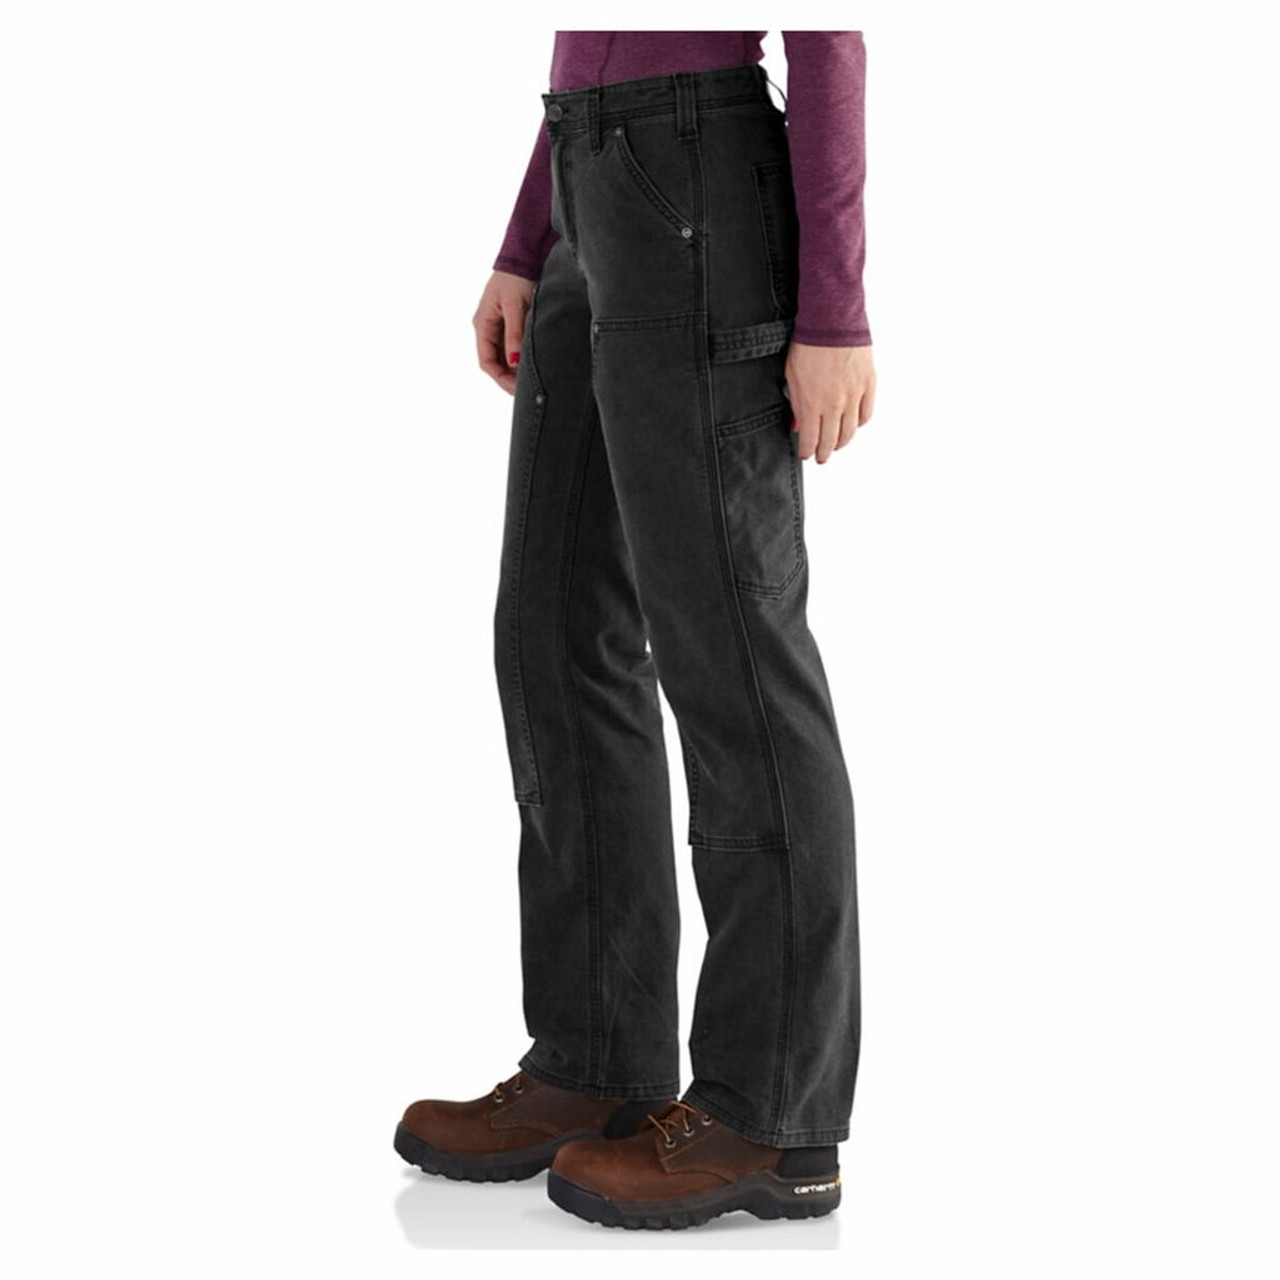 Carhartt Women's Size Slim Fit Crawford Pant, Black, 10 Tall